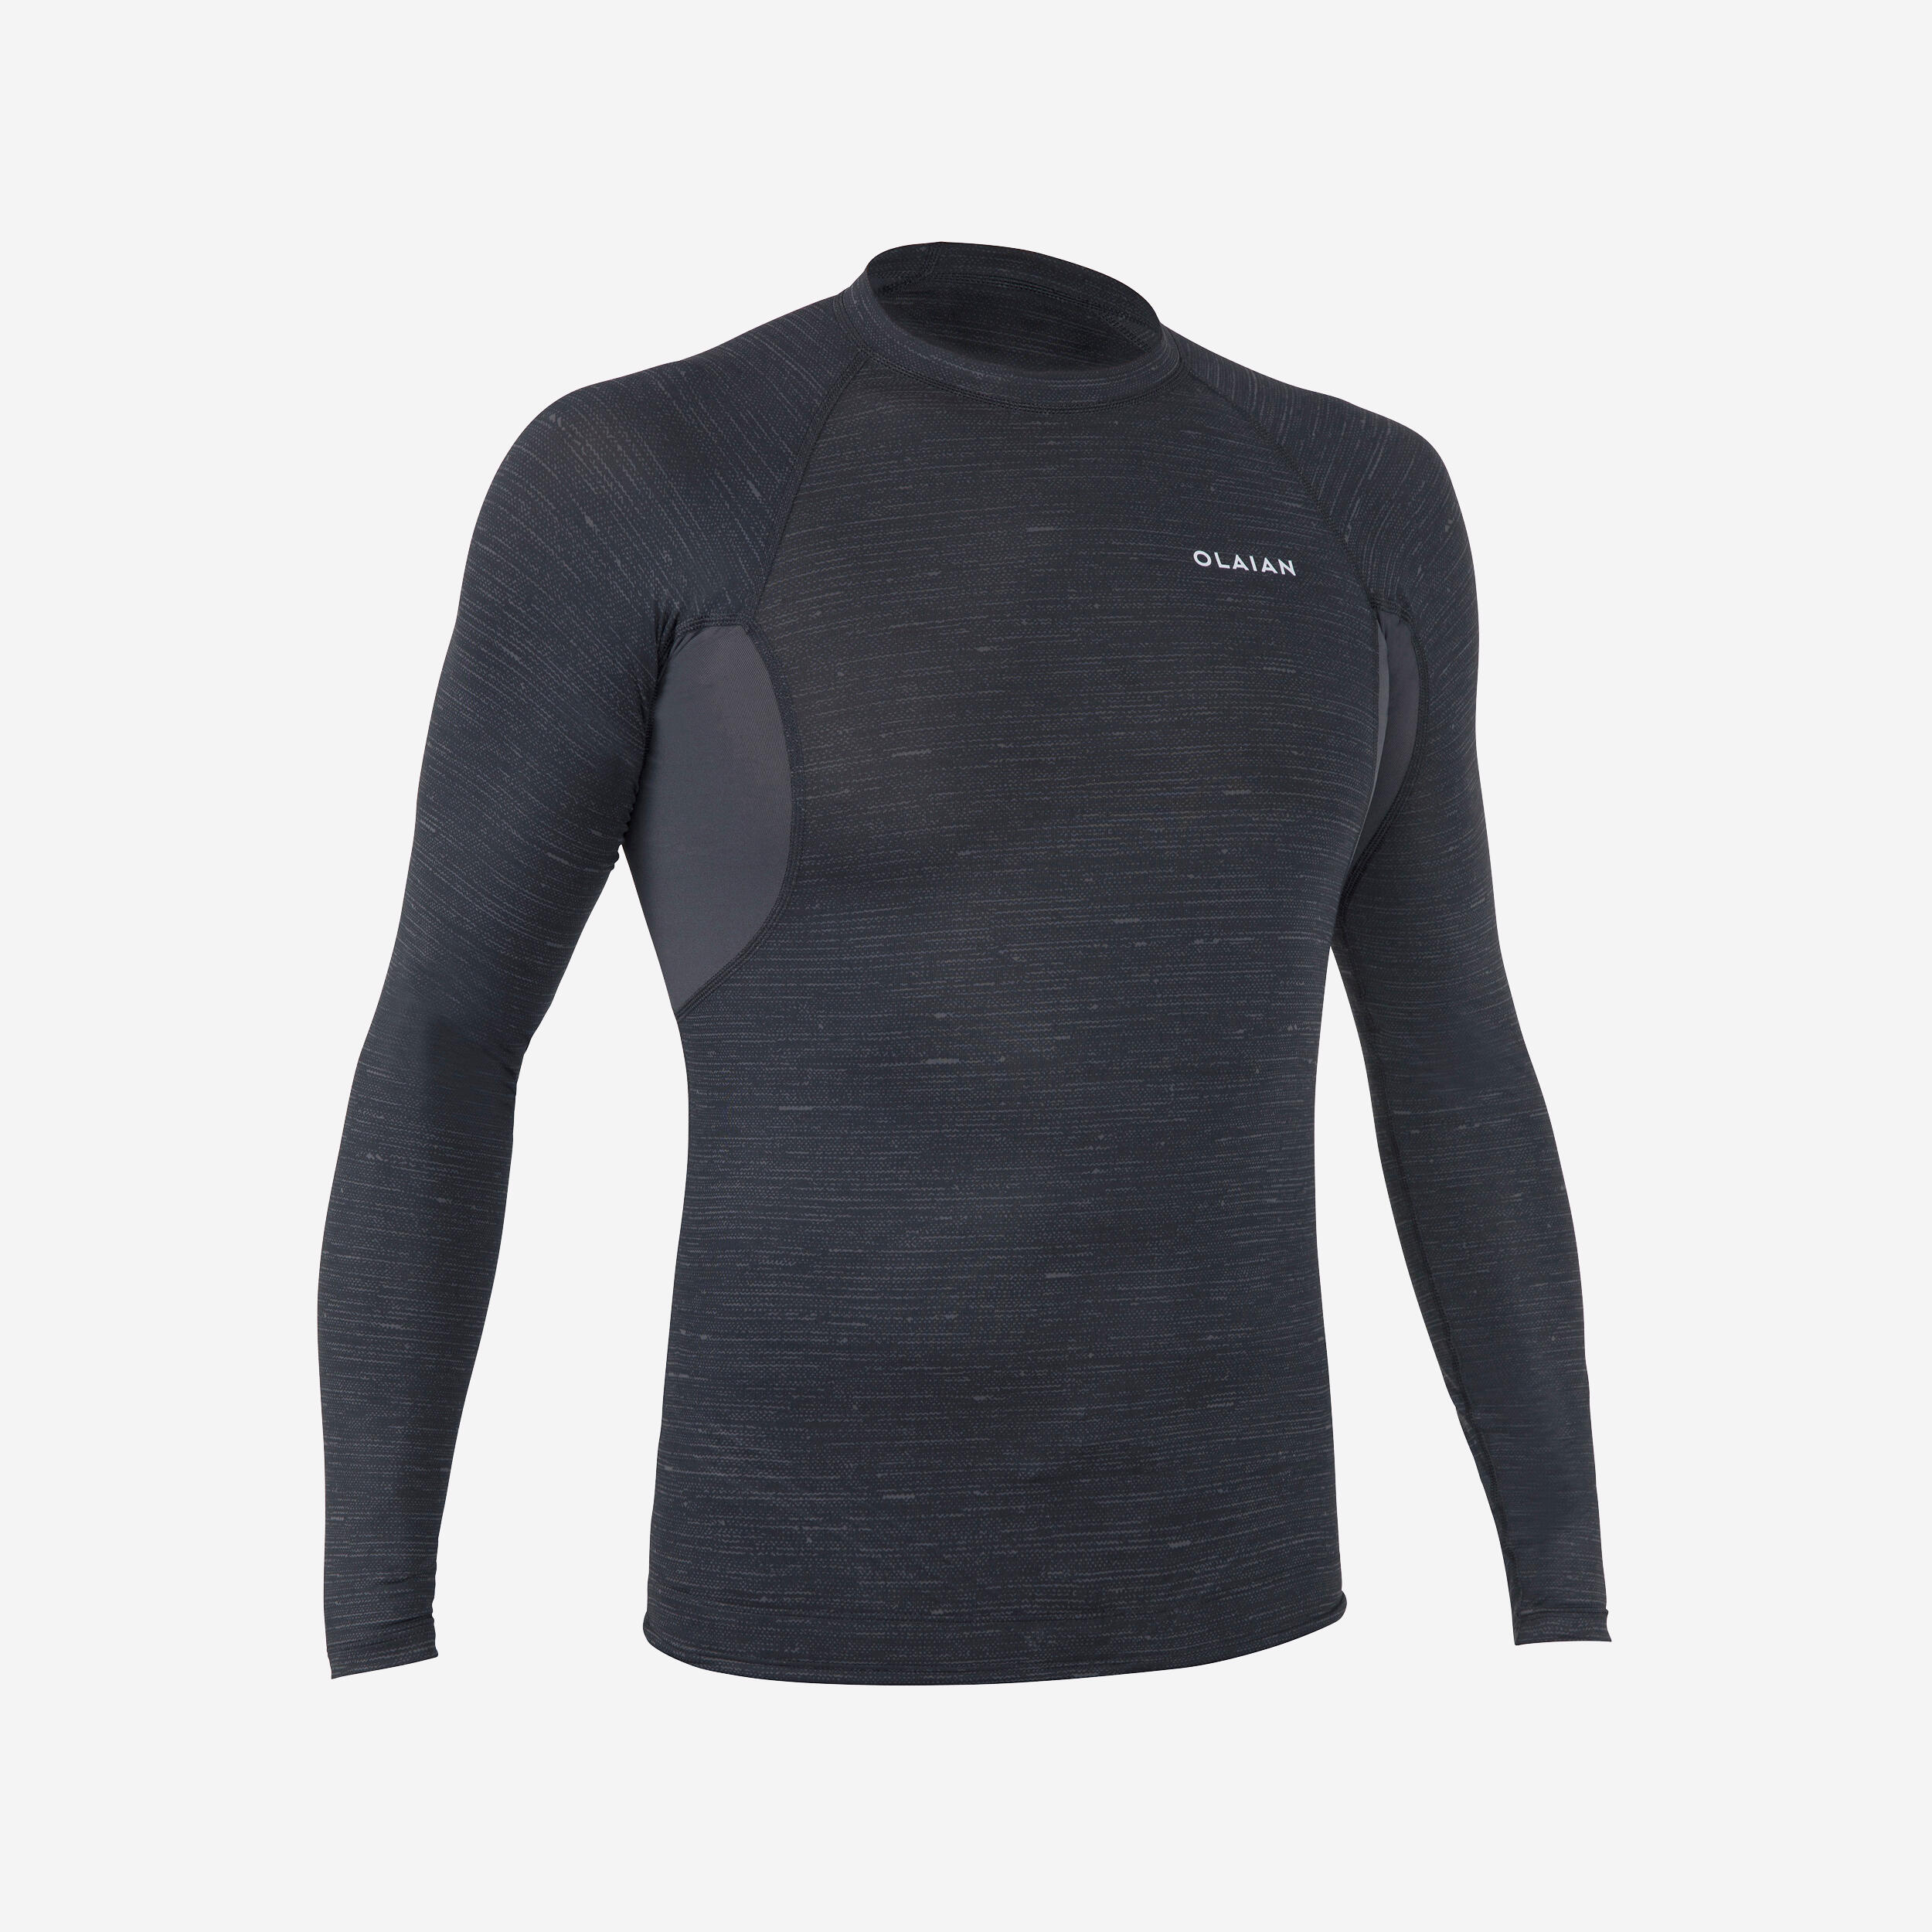 Men's Surfing Long Sleeve UV Protection Top T-Shirt 900 - Black 1/12